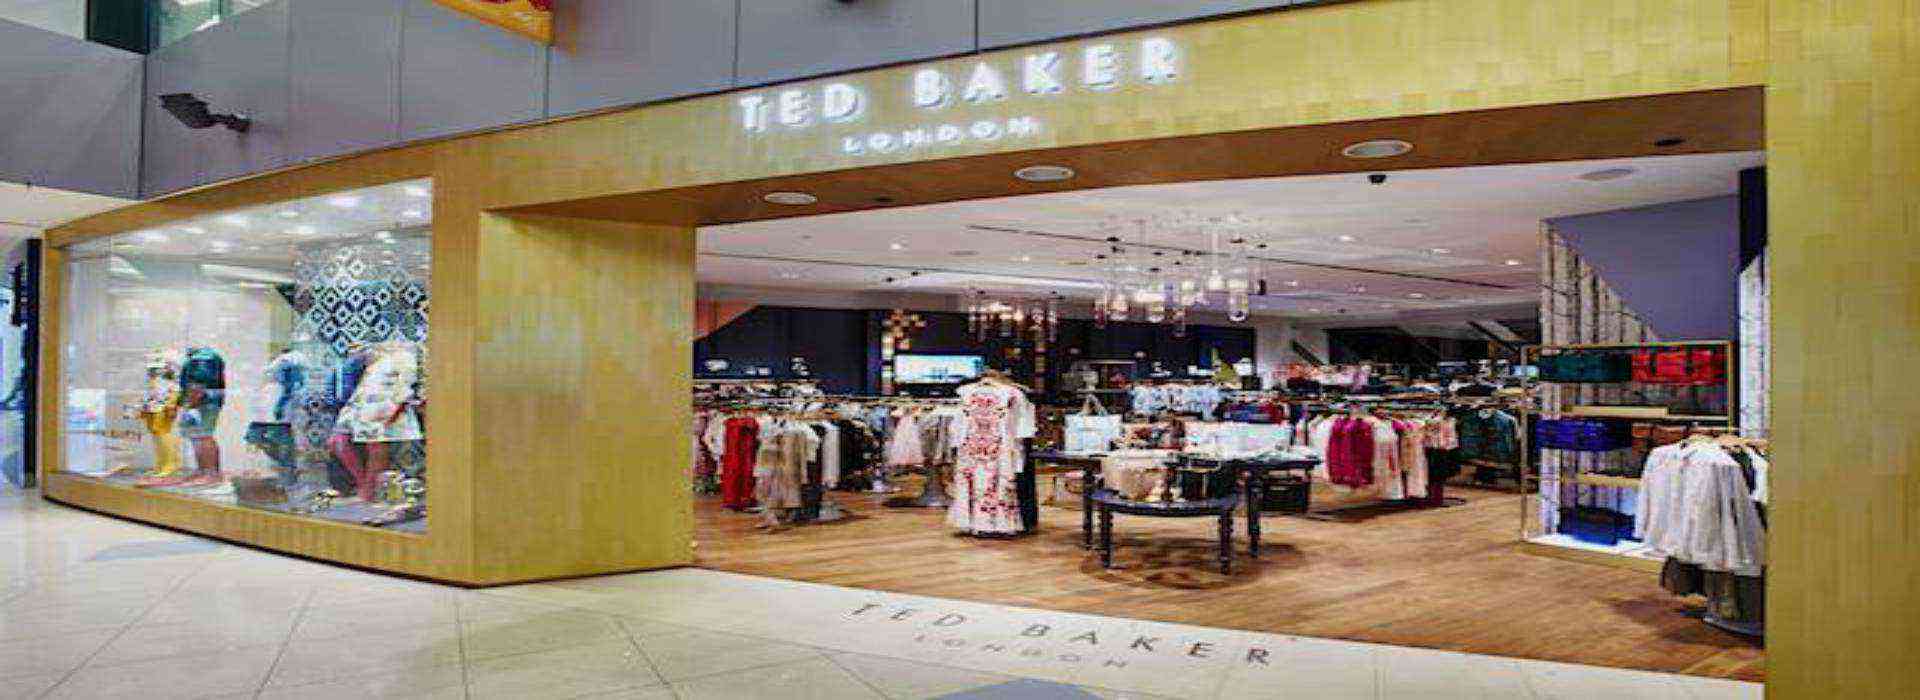 Ted-Baker-Malaysia.jpg | CustomerServiceDirectory